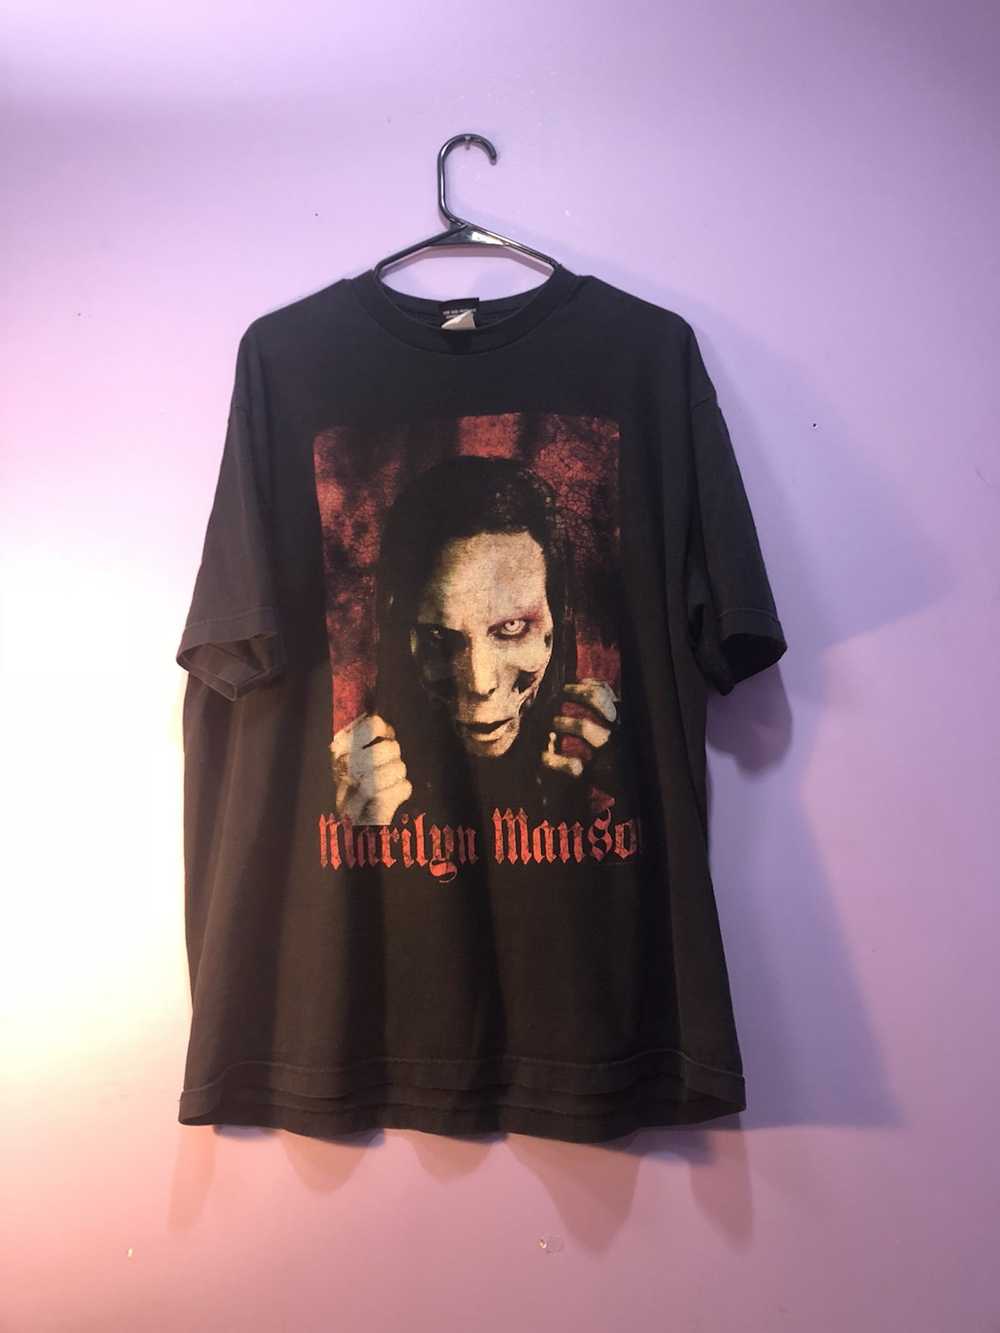 Vintage Marilyn Manson - image 1